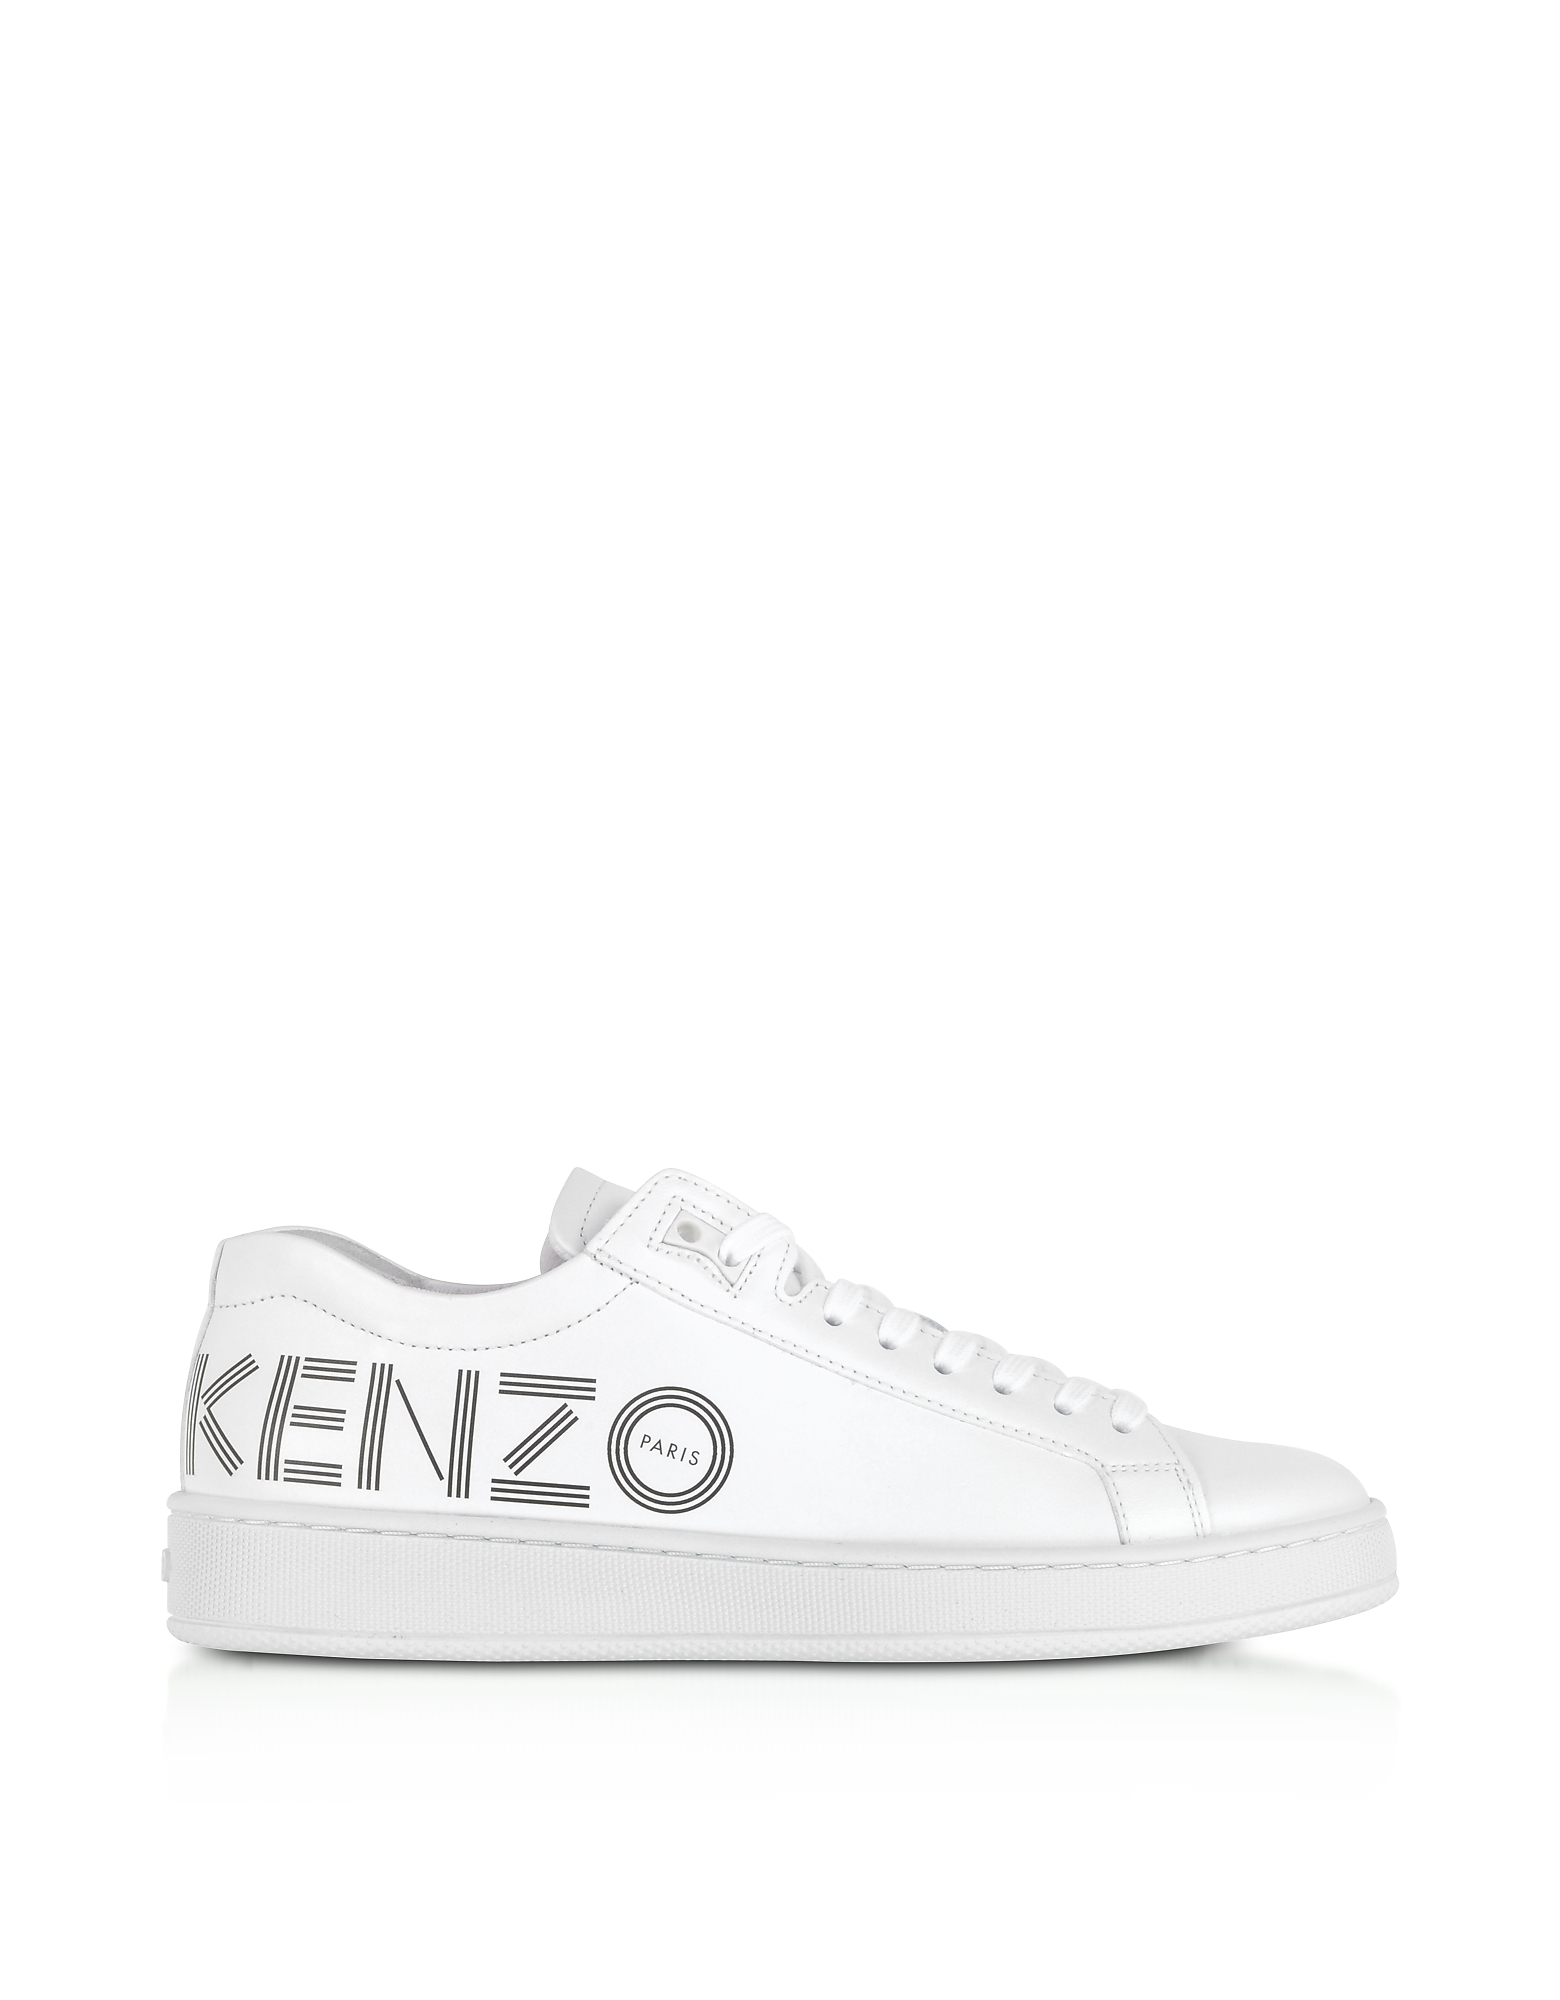 

Kenzo Tennix White Leather Women's Sneakers